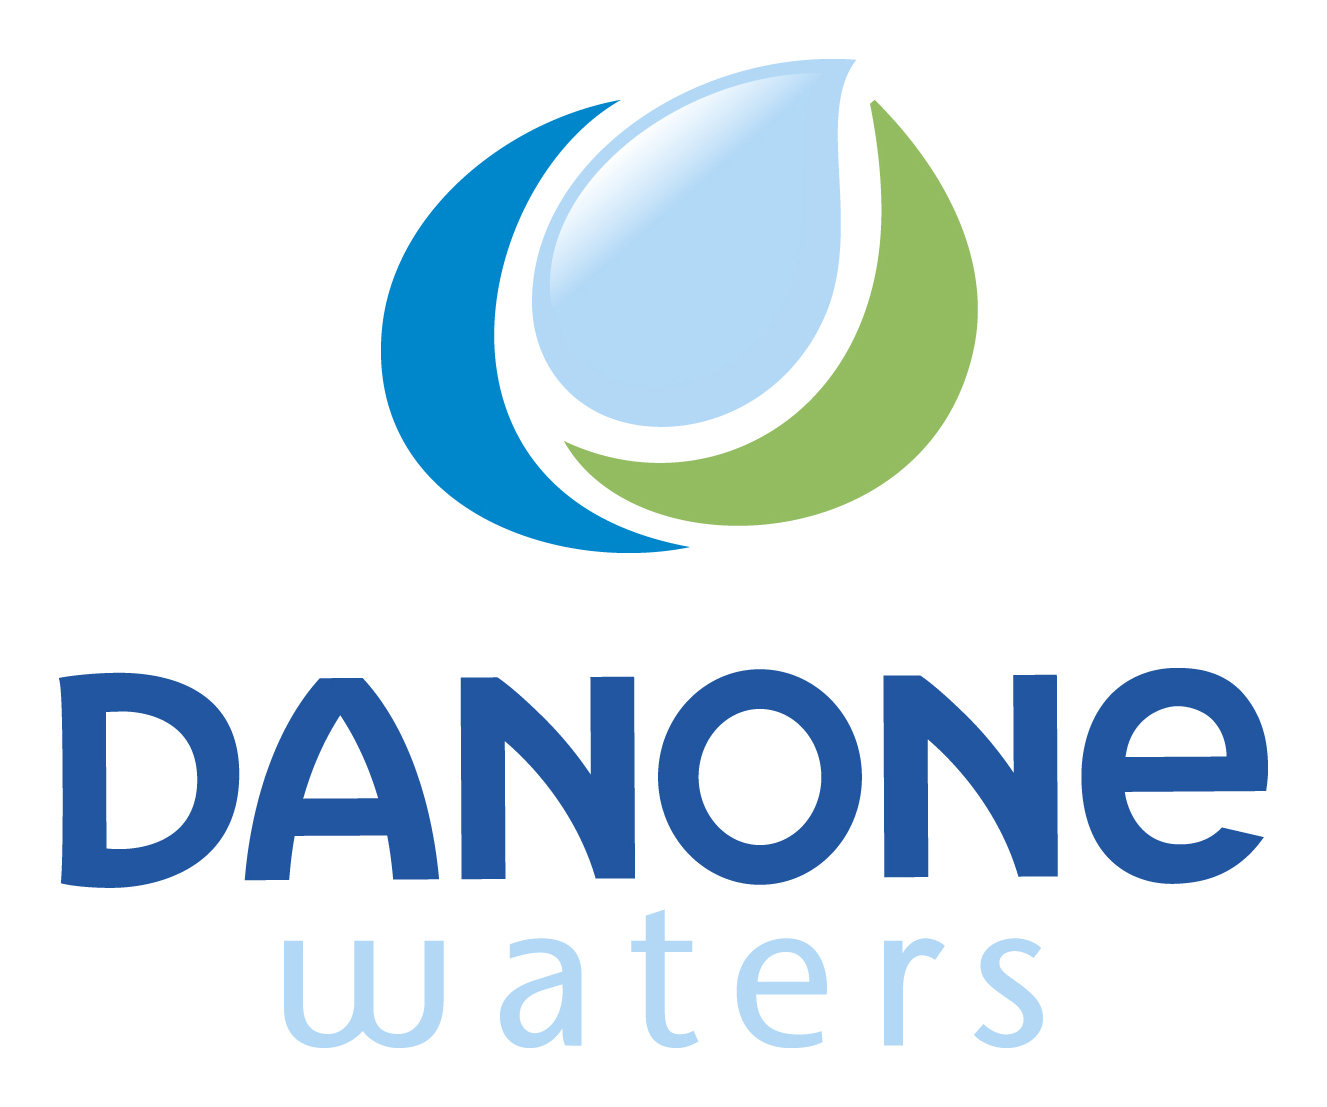 Danone_Waters_logo.png